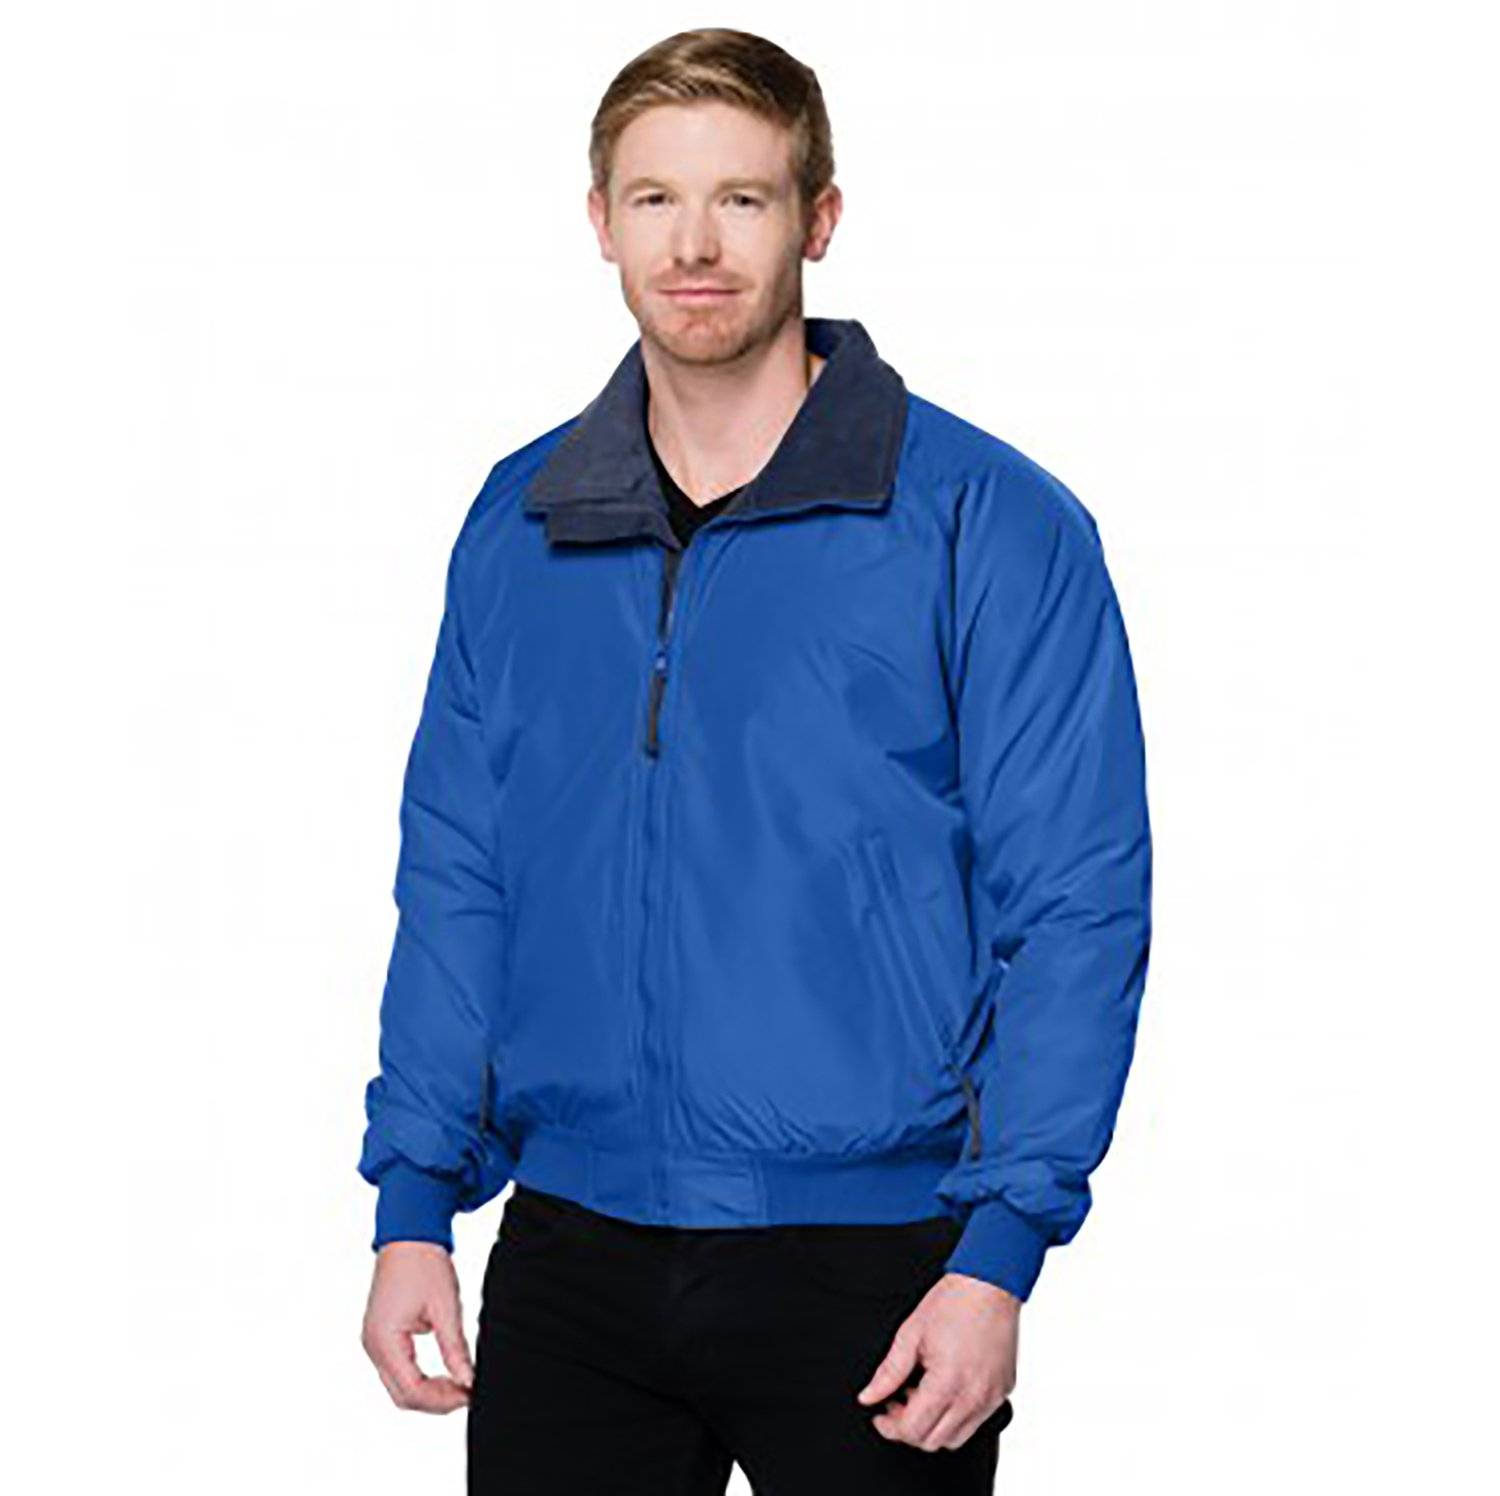 Tri-Mountain Mountaineer 3 Season Jacket with Fleece Liner